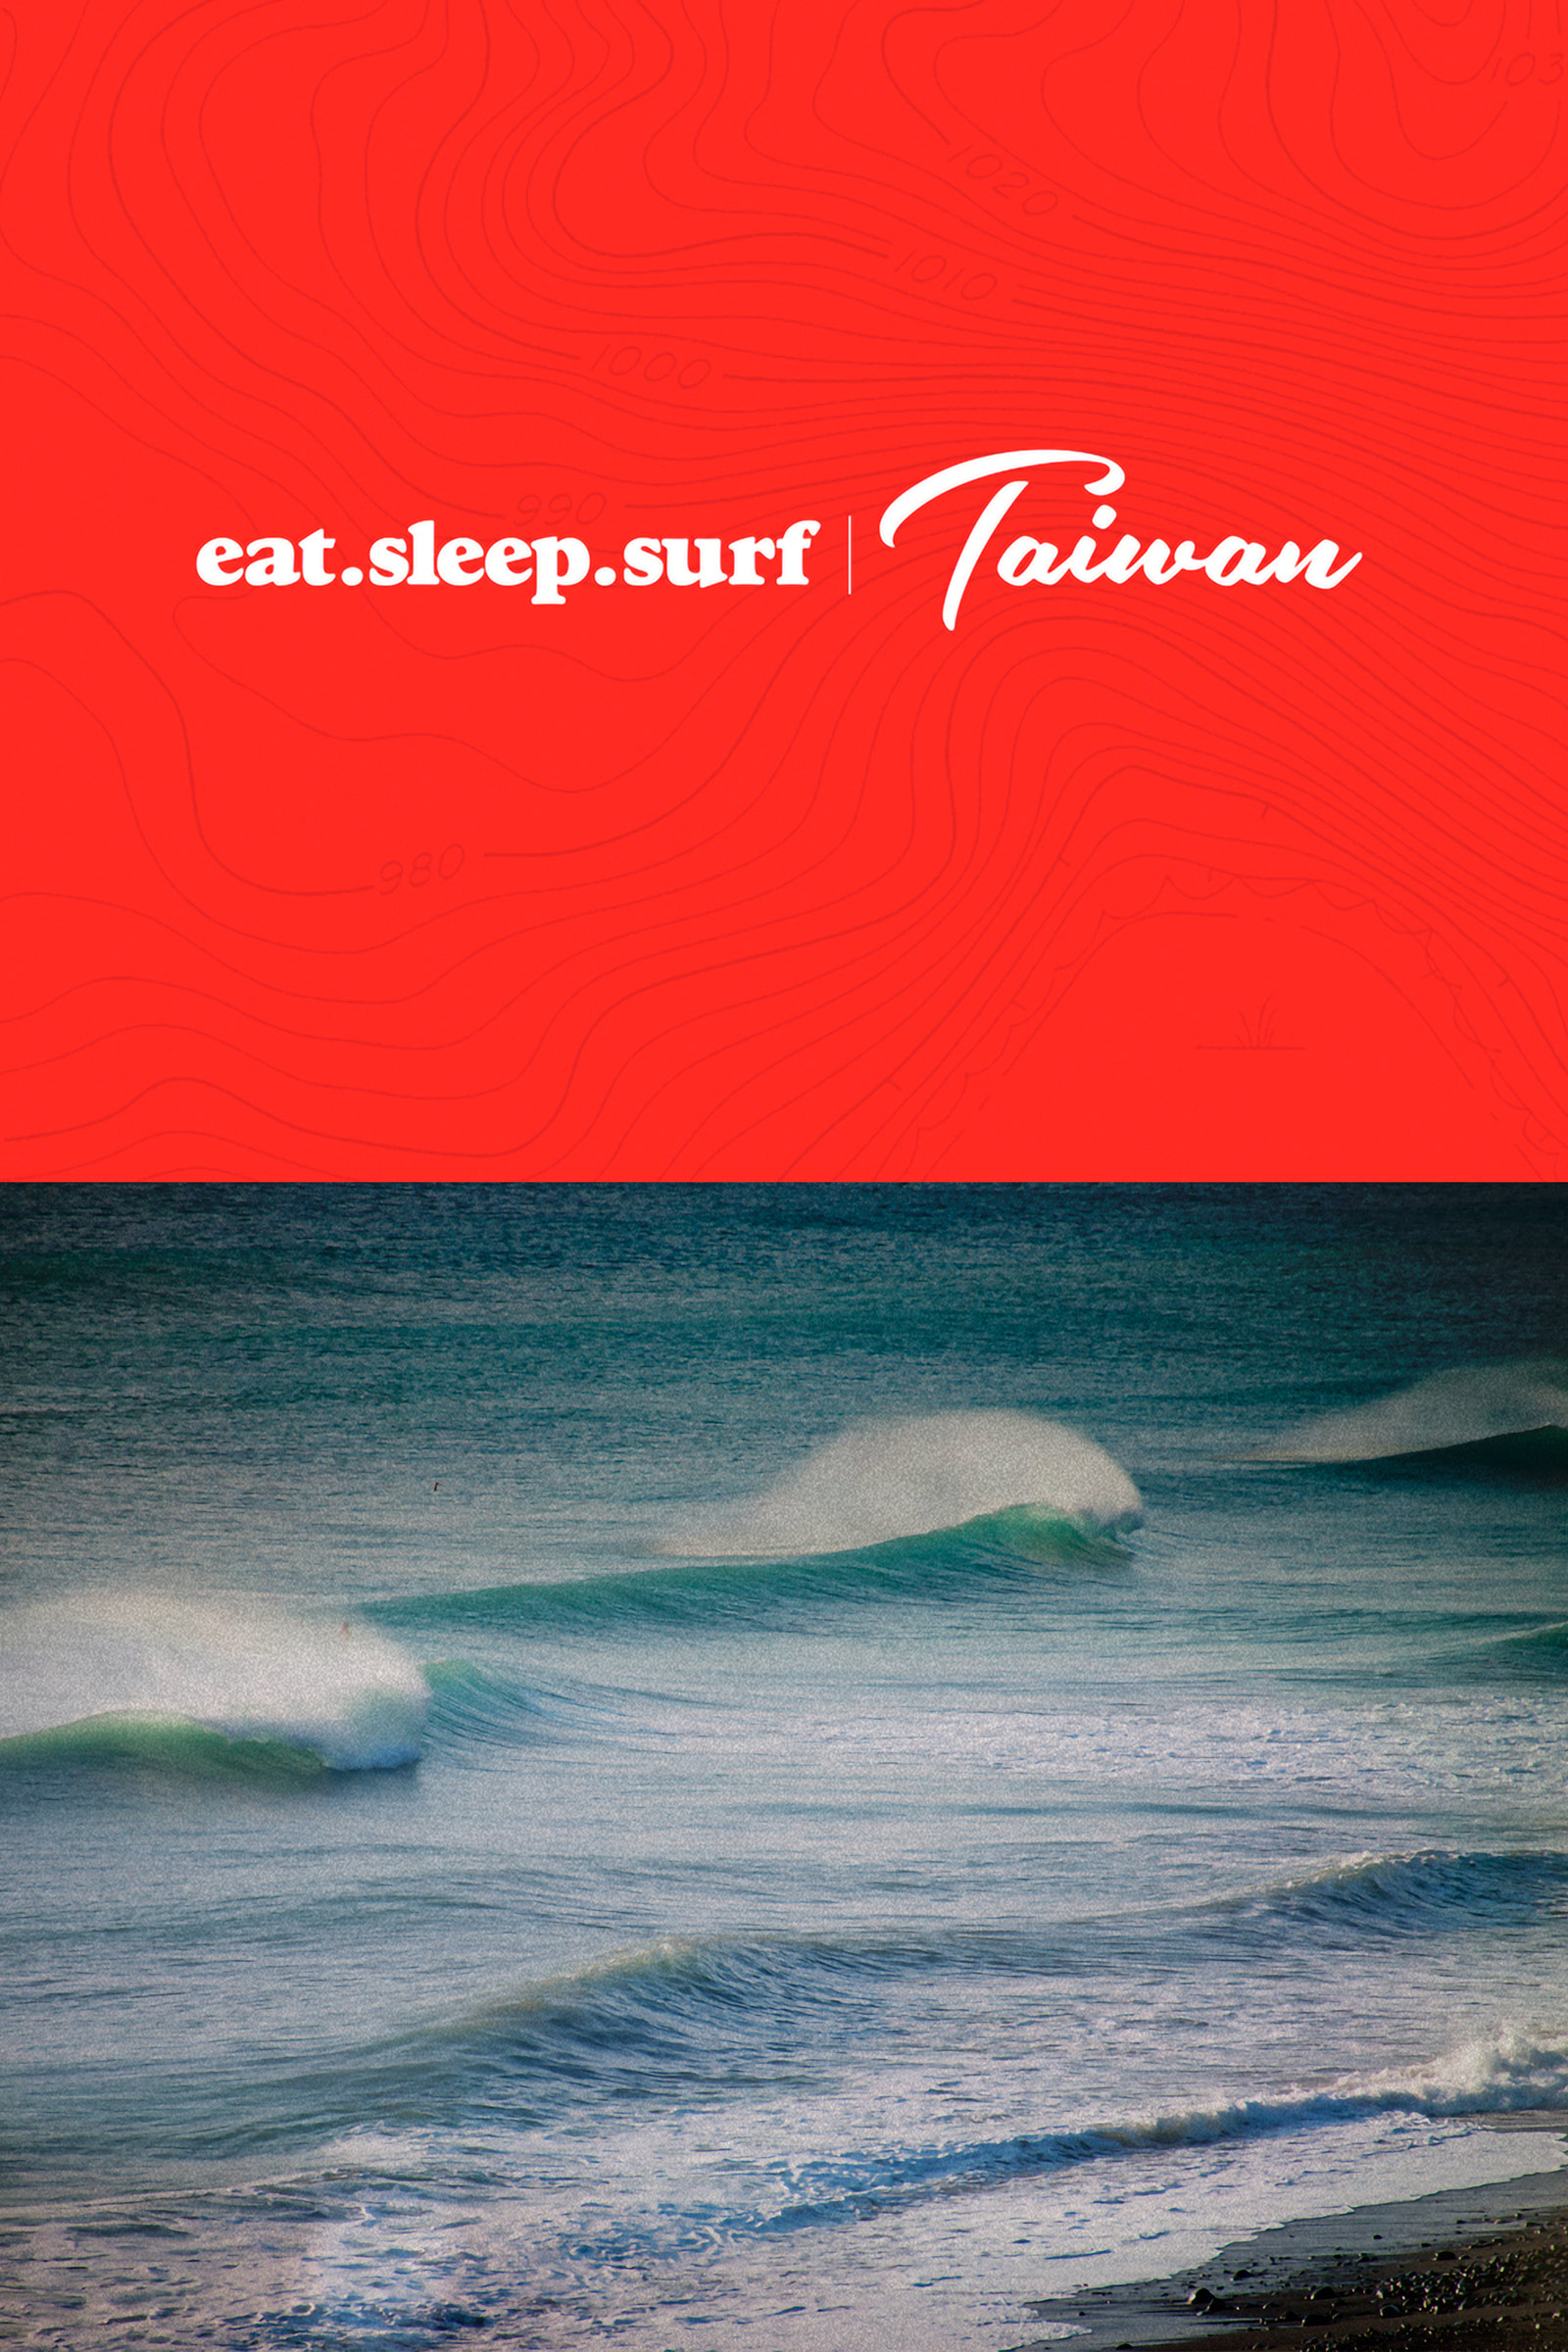 Where to stream Eat. Sleep. Surf Taiwan